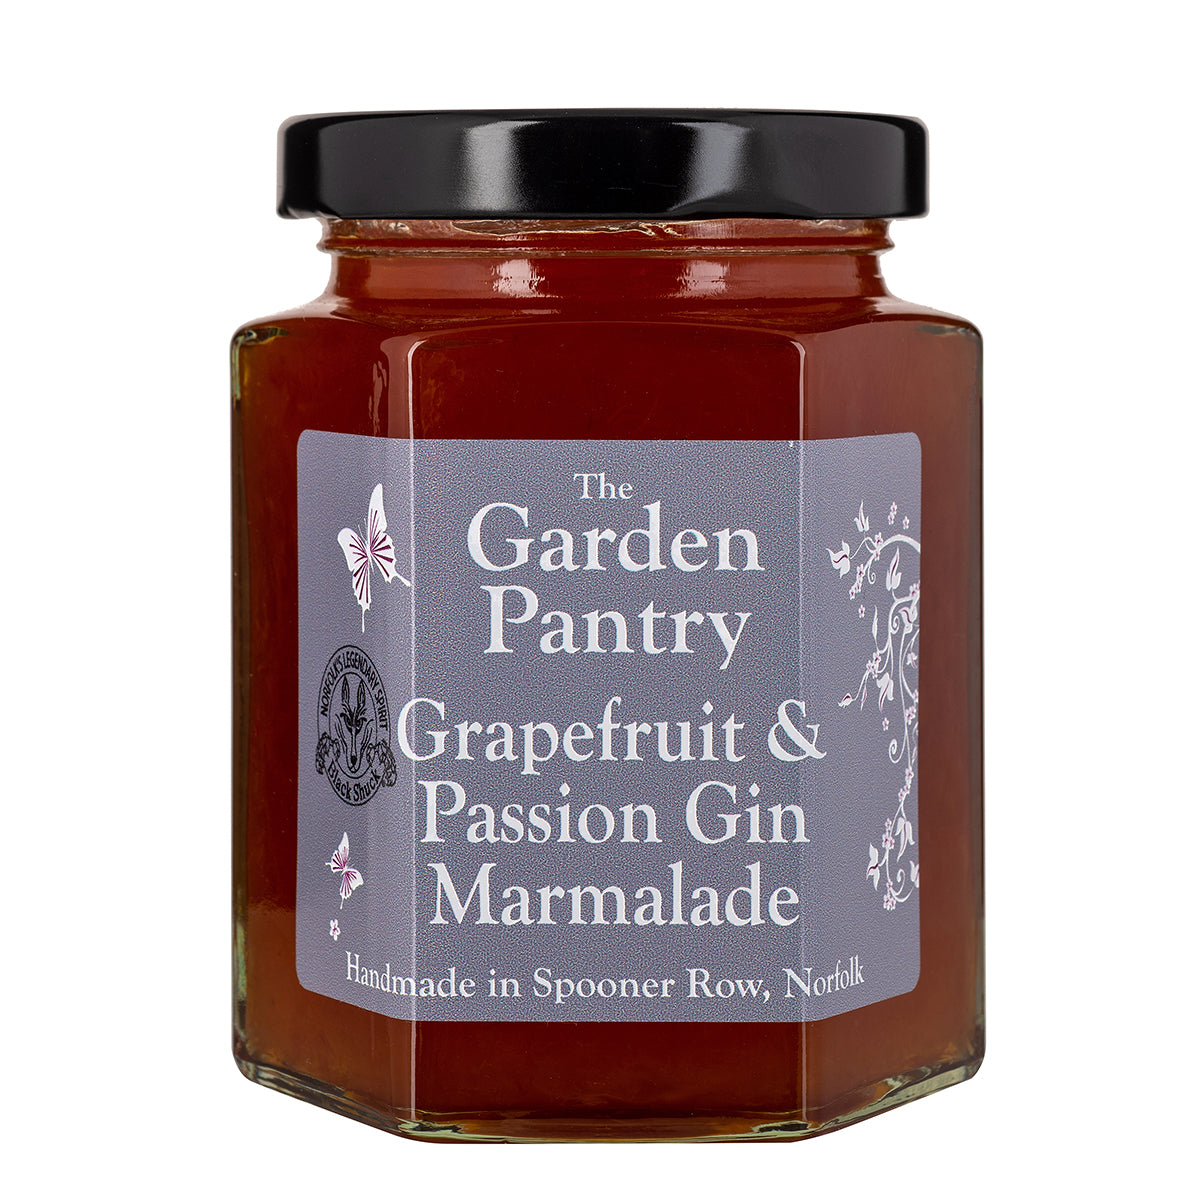 The Garden Pantry Grapefruit & Passion Gin Marmalade